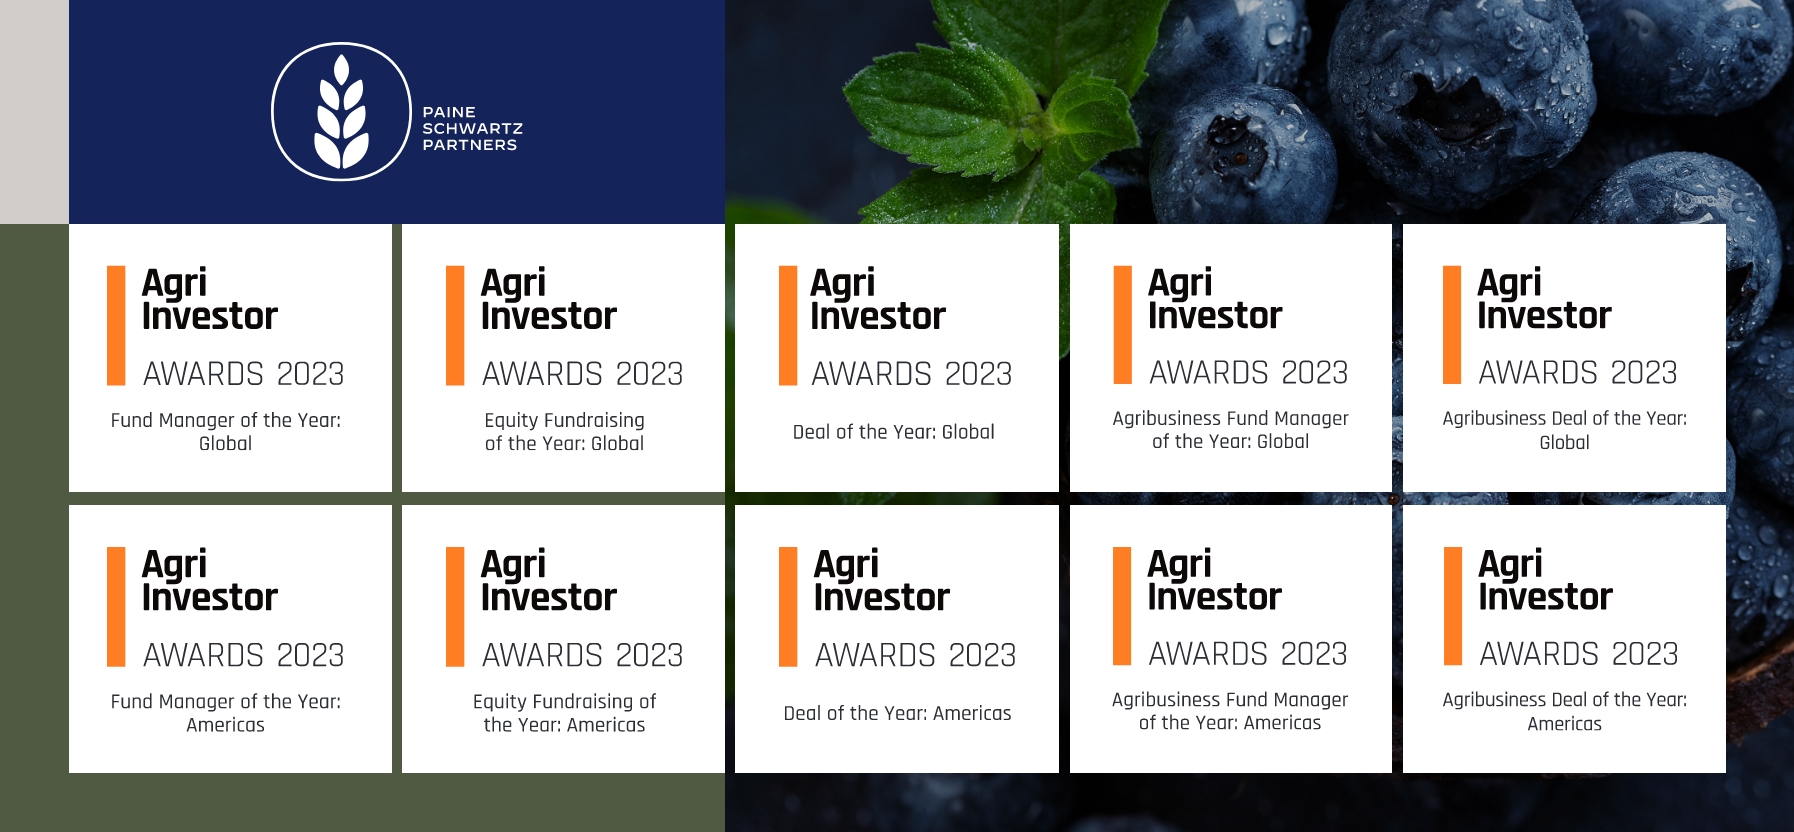 Agri Investor Award